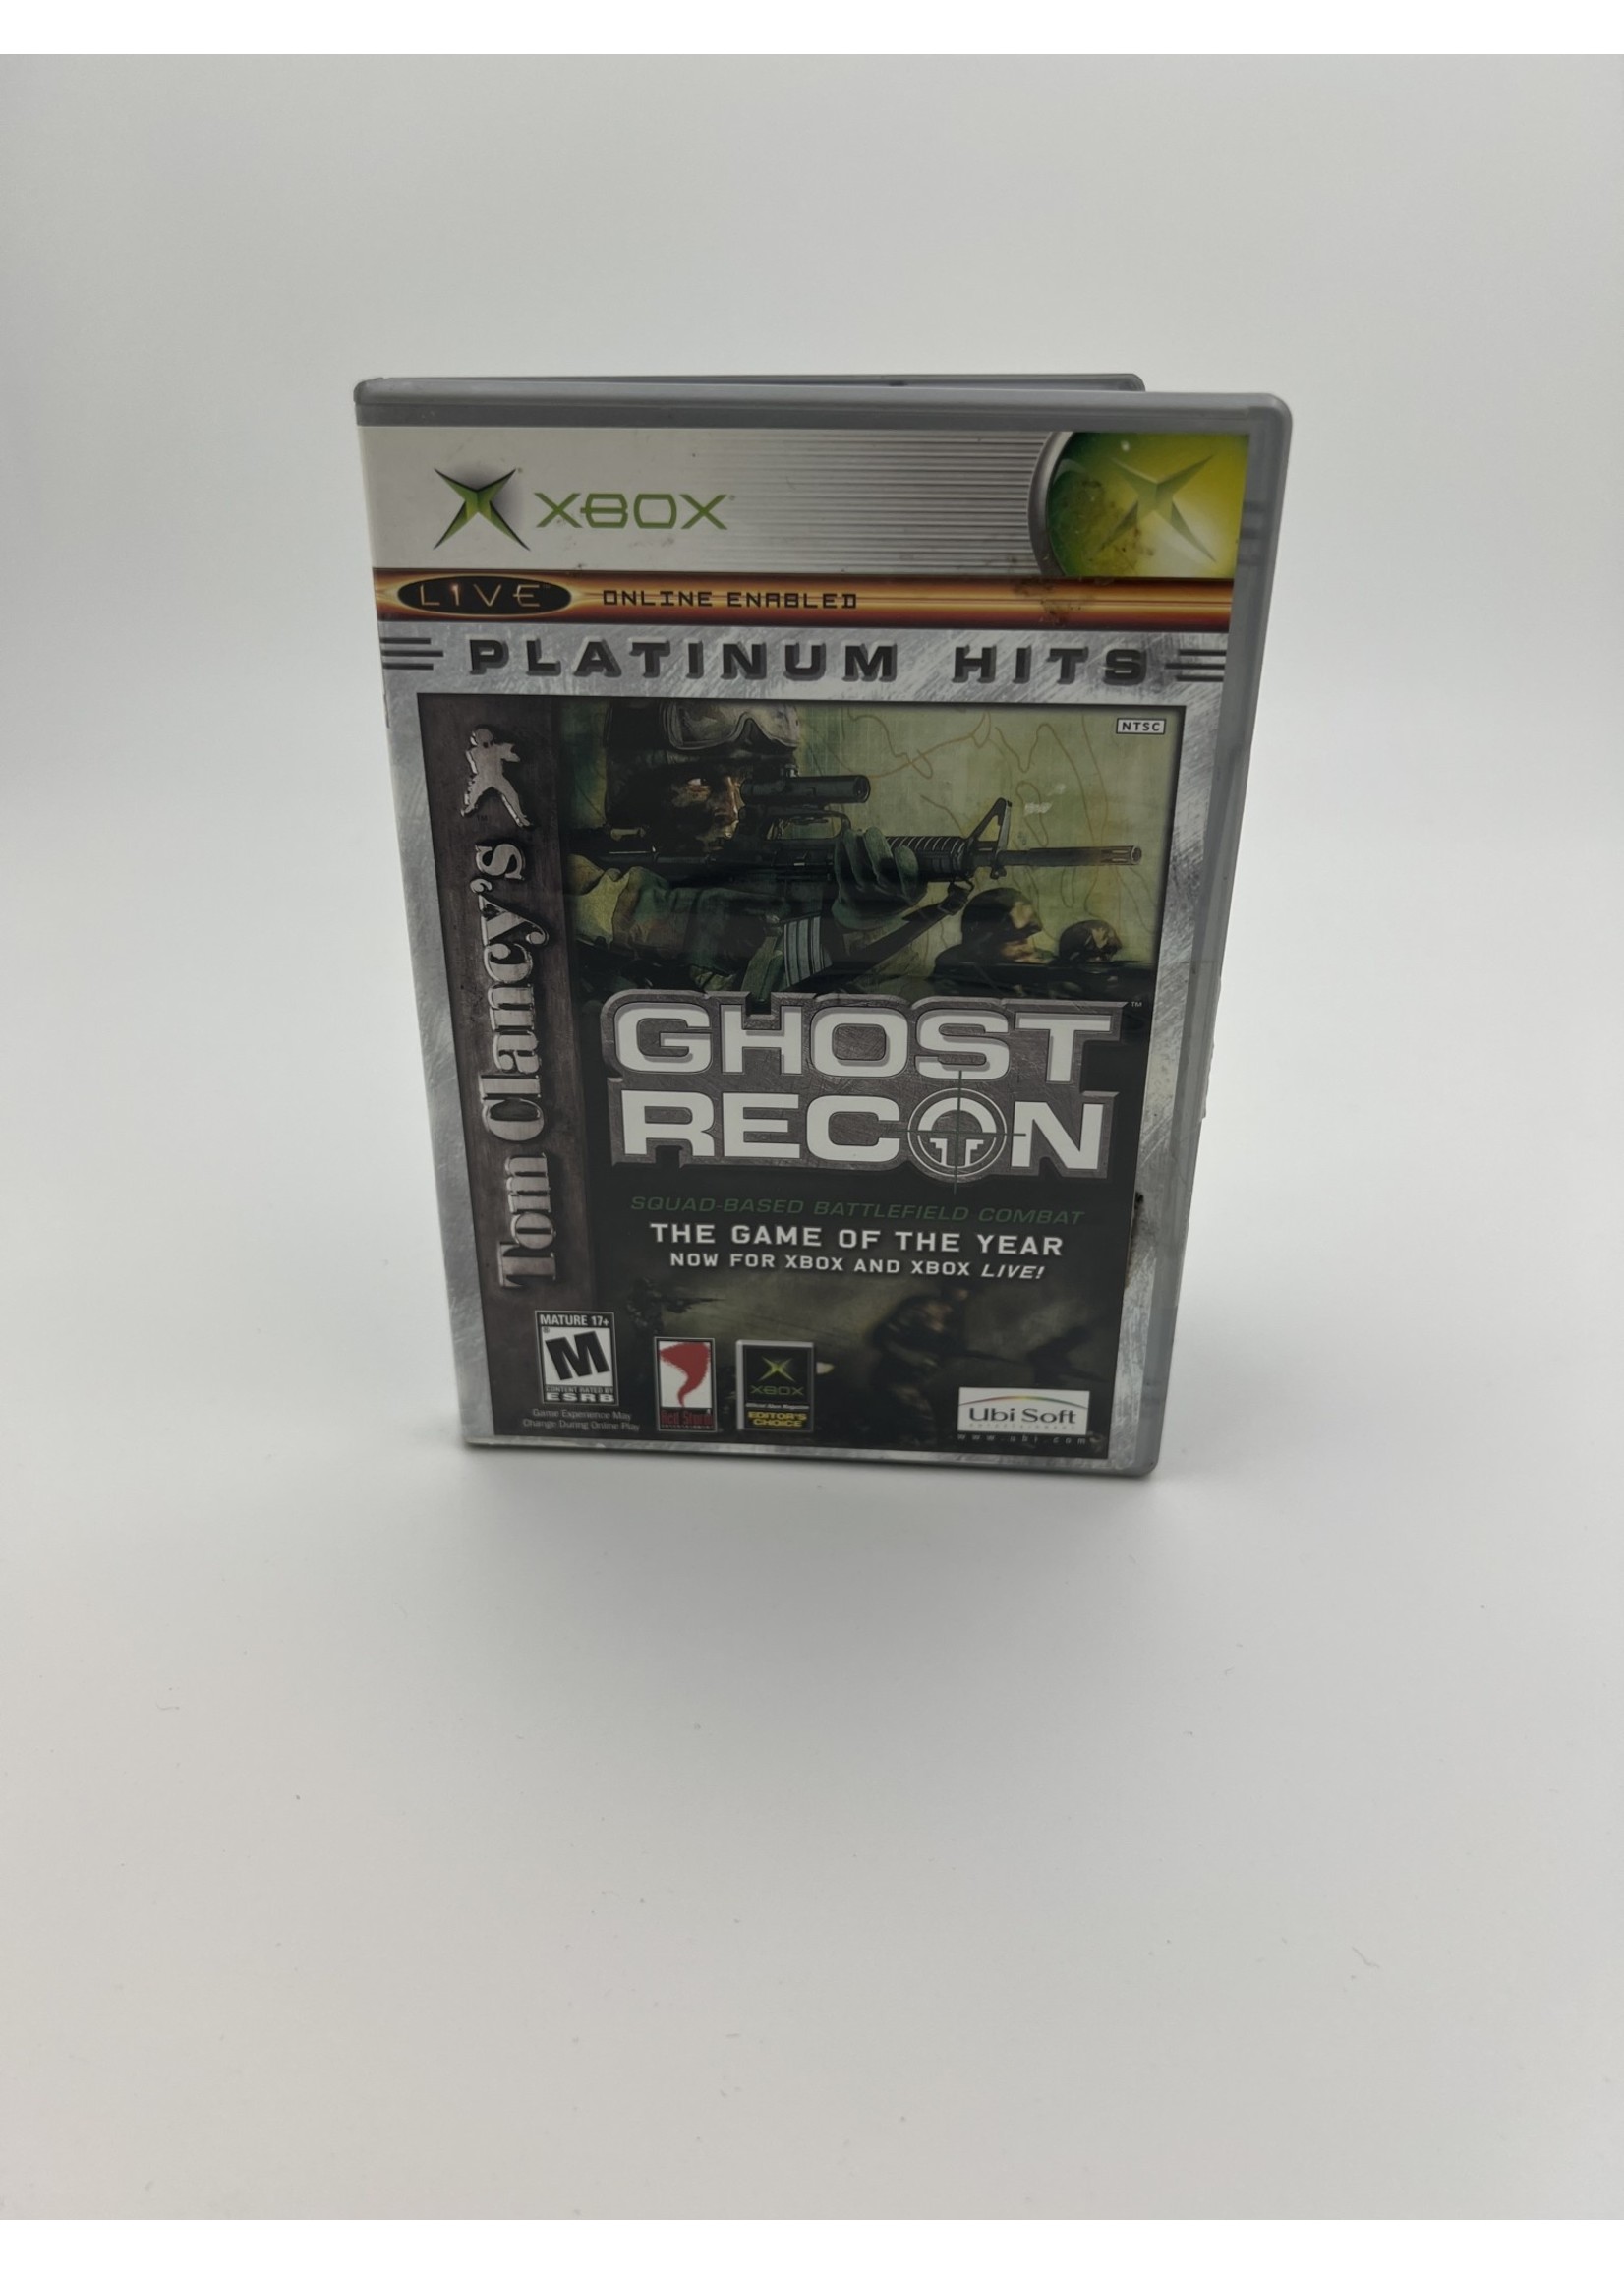 Xbox Tom Clancy Ghost Recon Platinum Hits Xbox